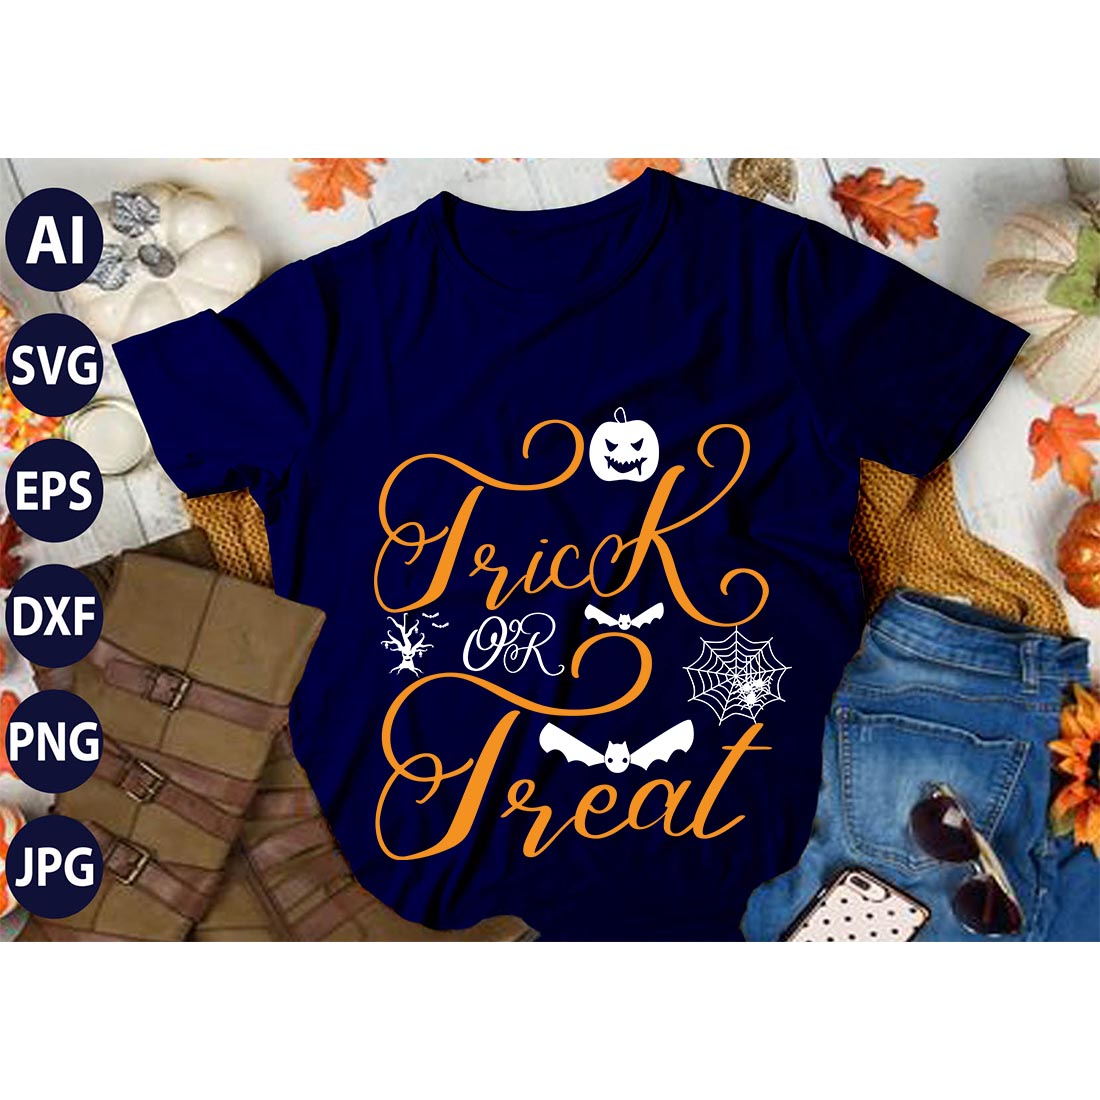 Trick or Treat, SVG T-Shirt Design |Happy Halloween & Pumpkin T-Shirt Design | Ai, Svg, Eps, Dxf, Jpeg, Png, Instant download T-Shirt | 100% print-ready Digital vector file cover image.